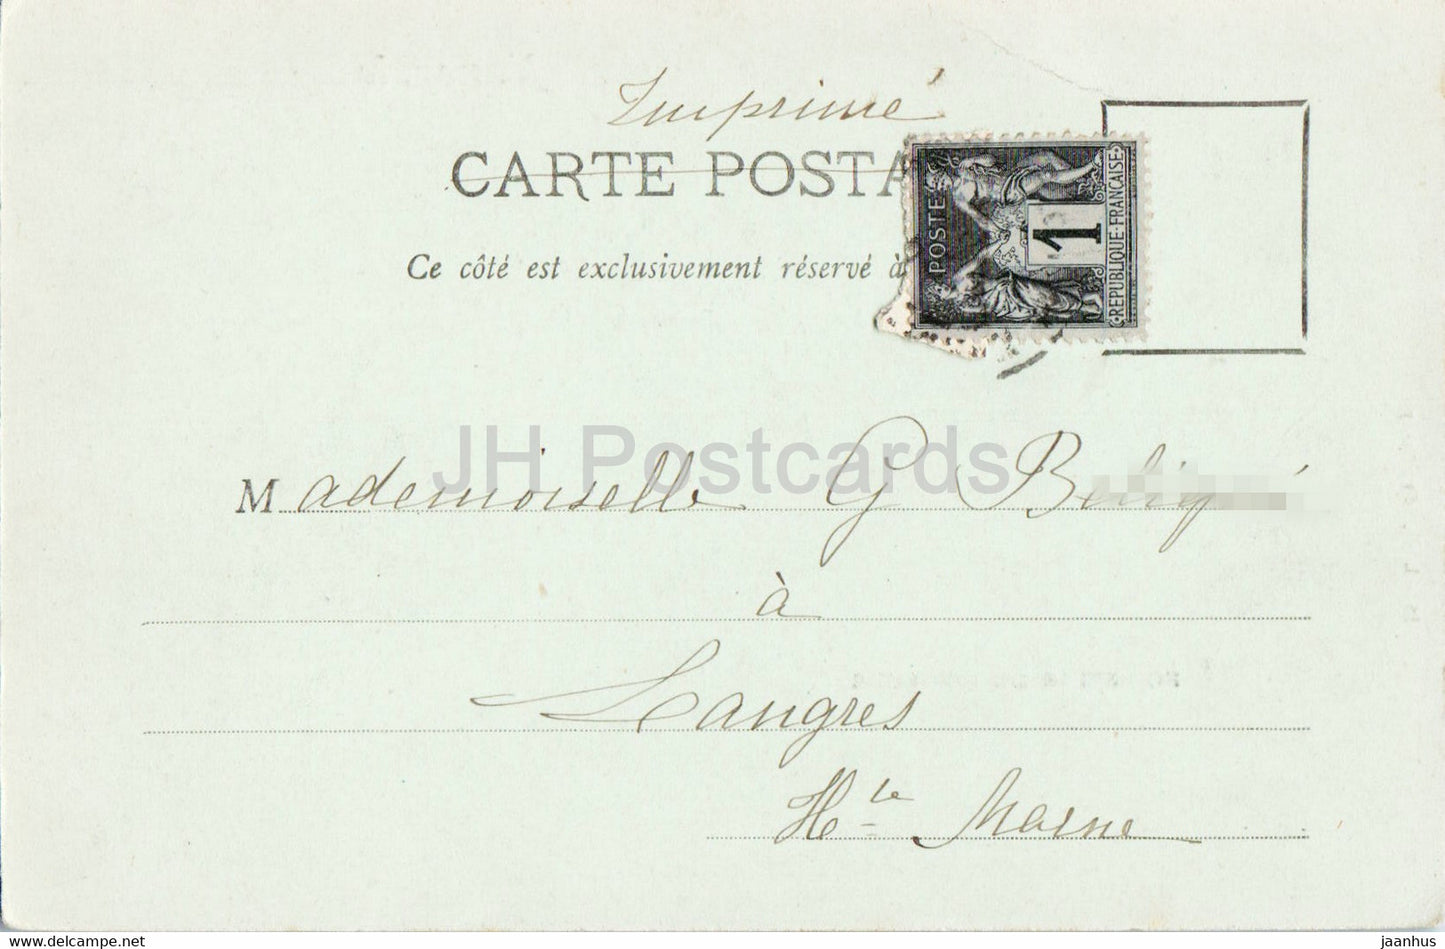 Nancy - Fontaine de Neptune - old postcard - France - used